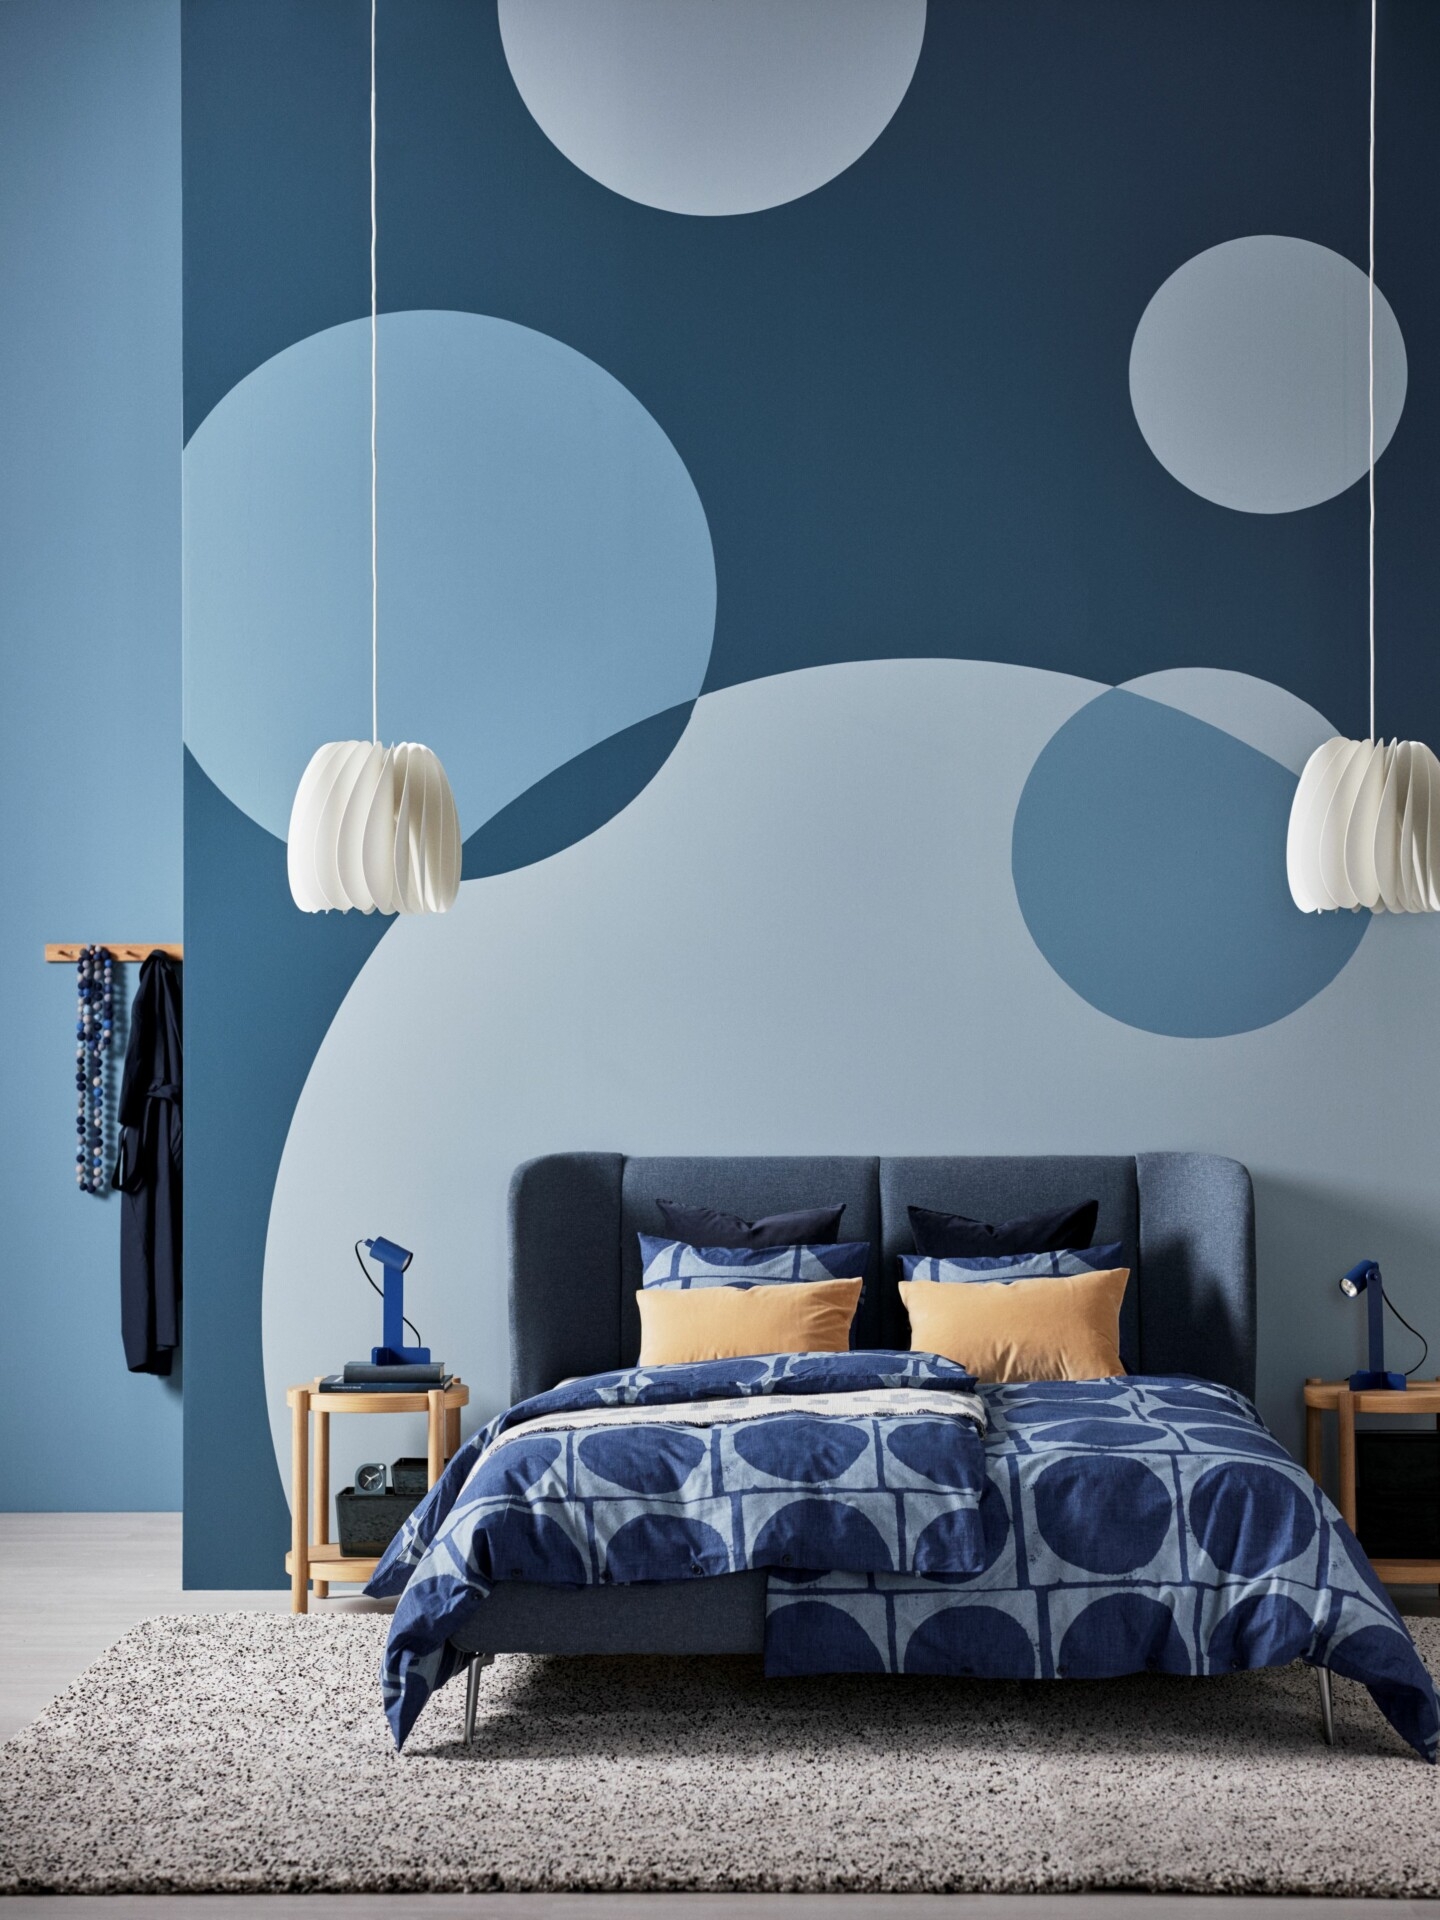 20 calming light grey bedroom wall ideas - COCO LAPINE DESIGN